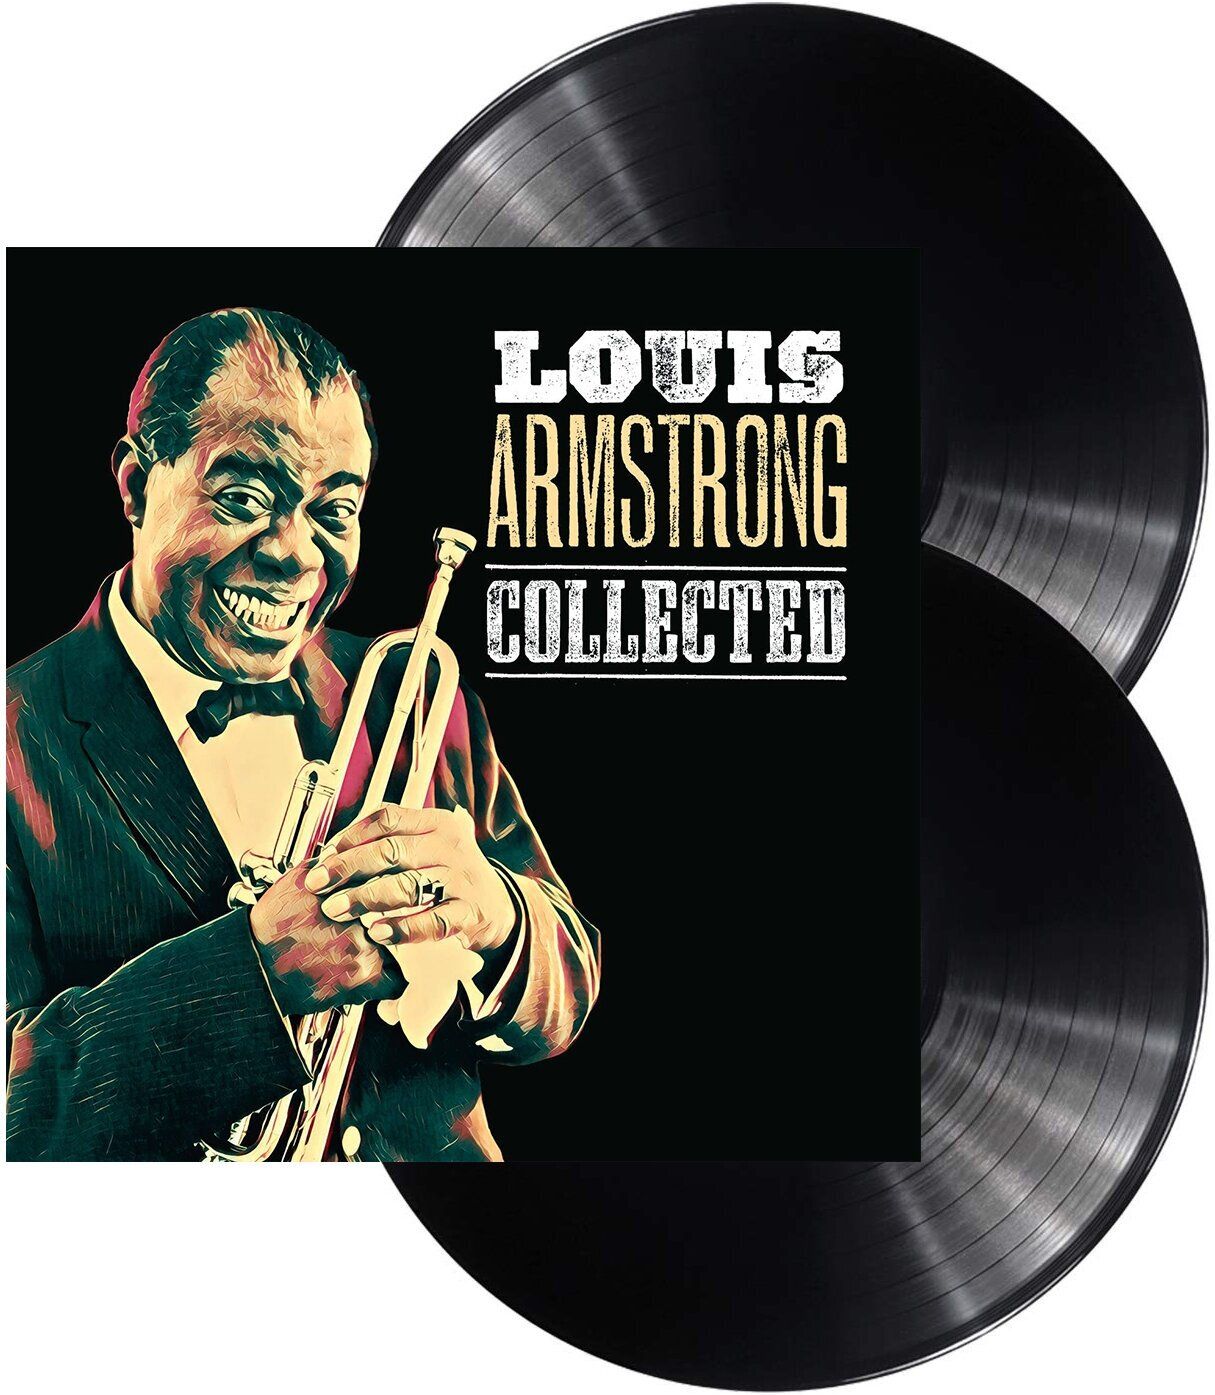 Виниловая пластинка Armstrong, Louis, Collected (0600753814345)